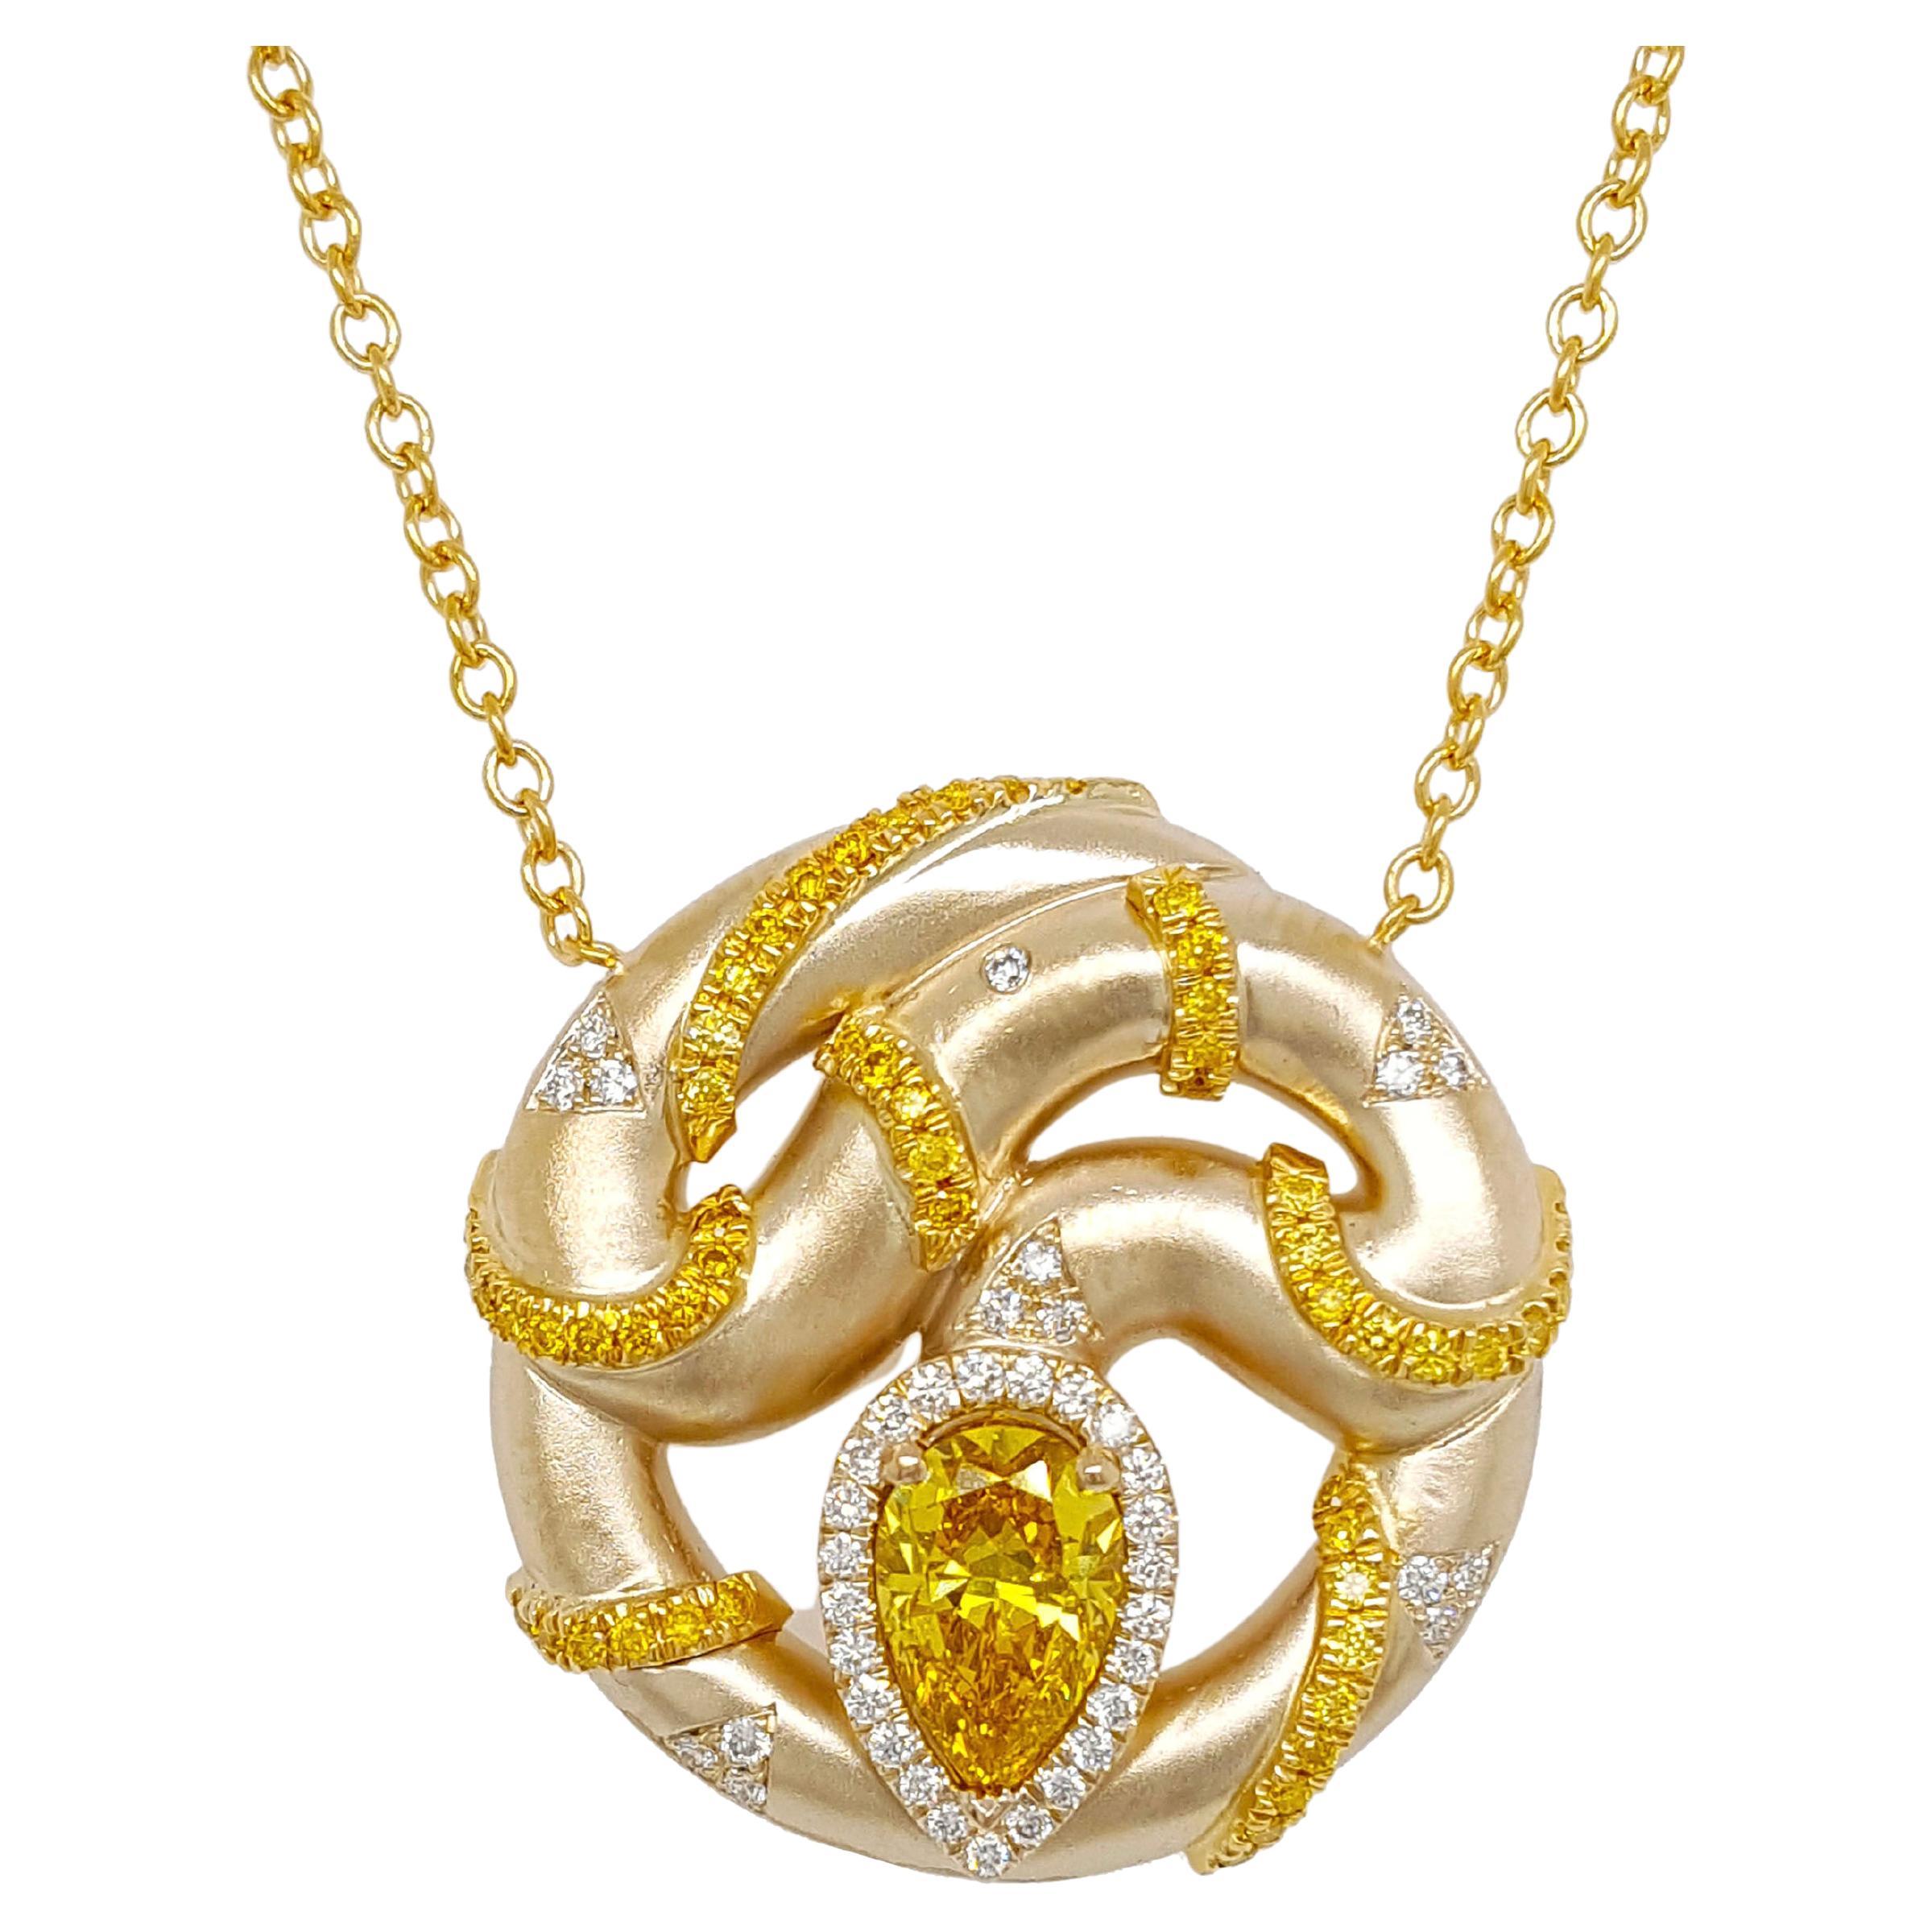 1 Carat Fancy Vivid Yellow Diamond Pendant Necklace 18K Gold GIA Certified